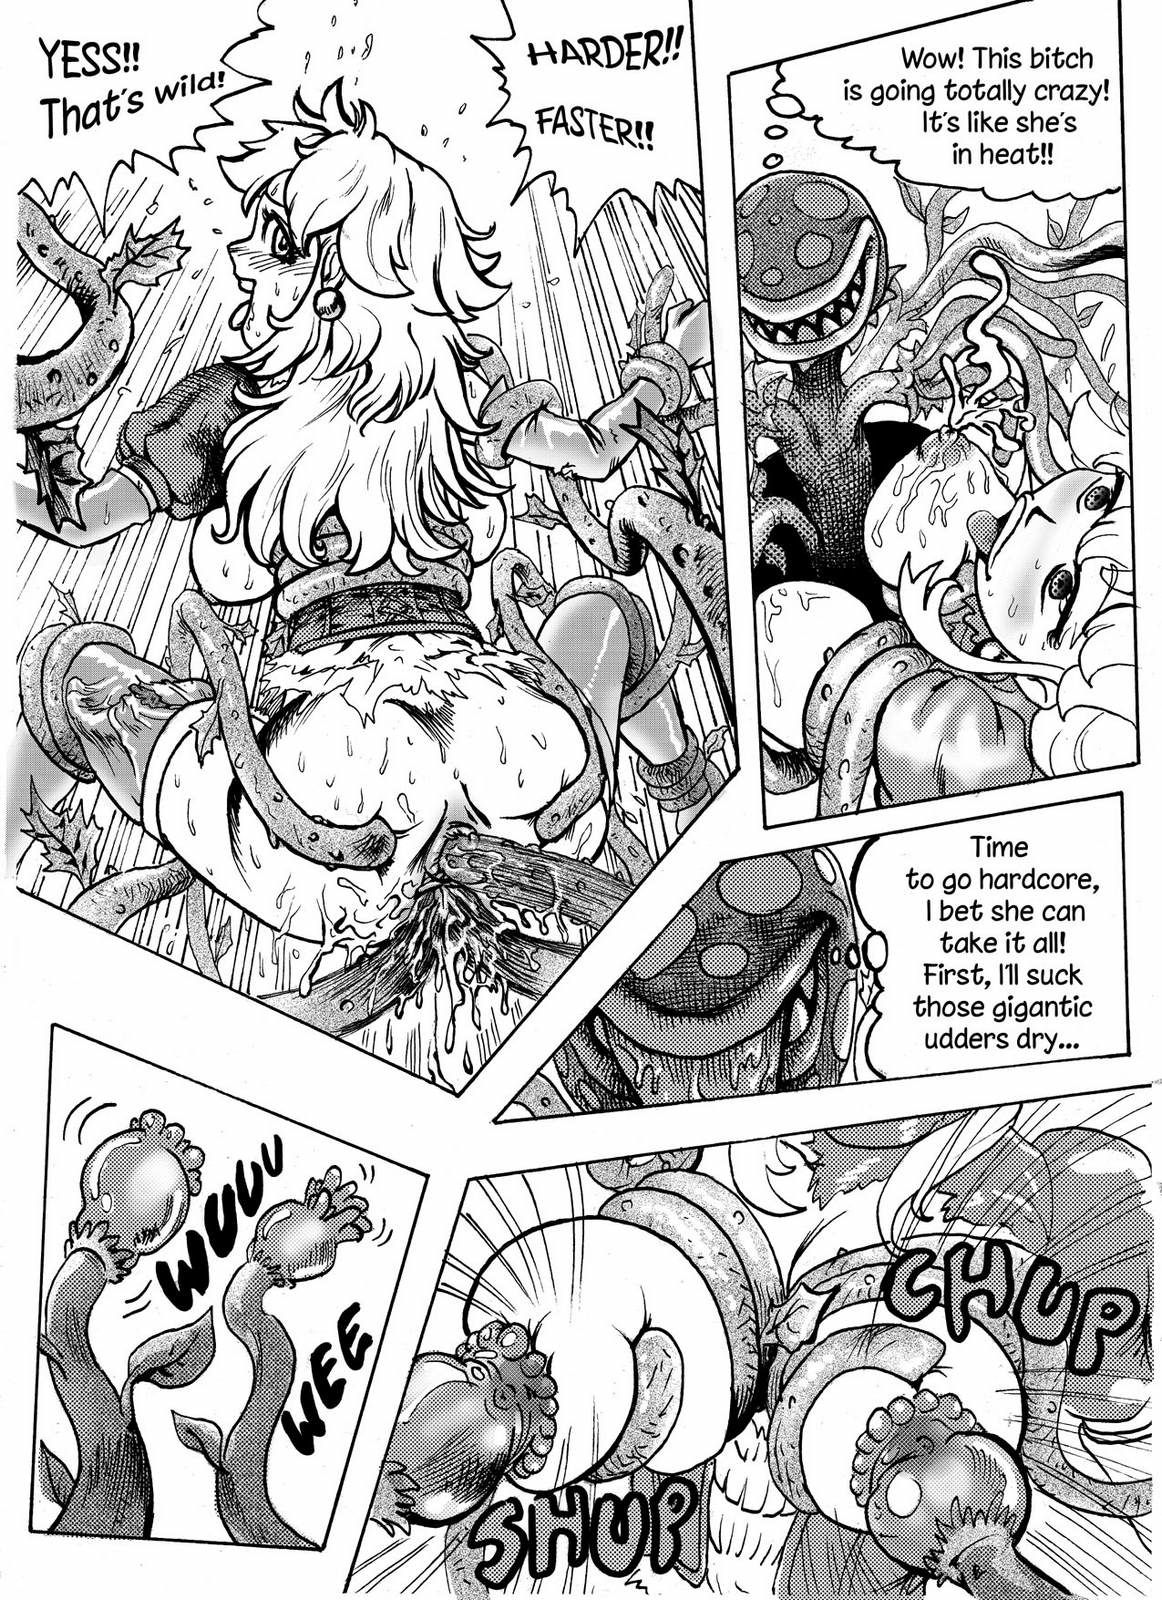 Super Wild Adventure 2 by Saikyo3B page 9